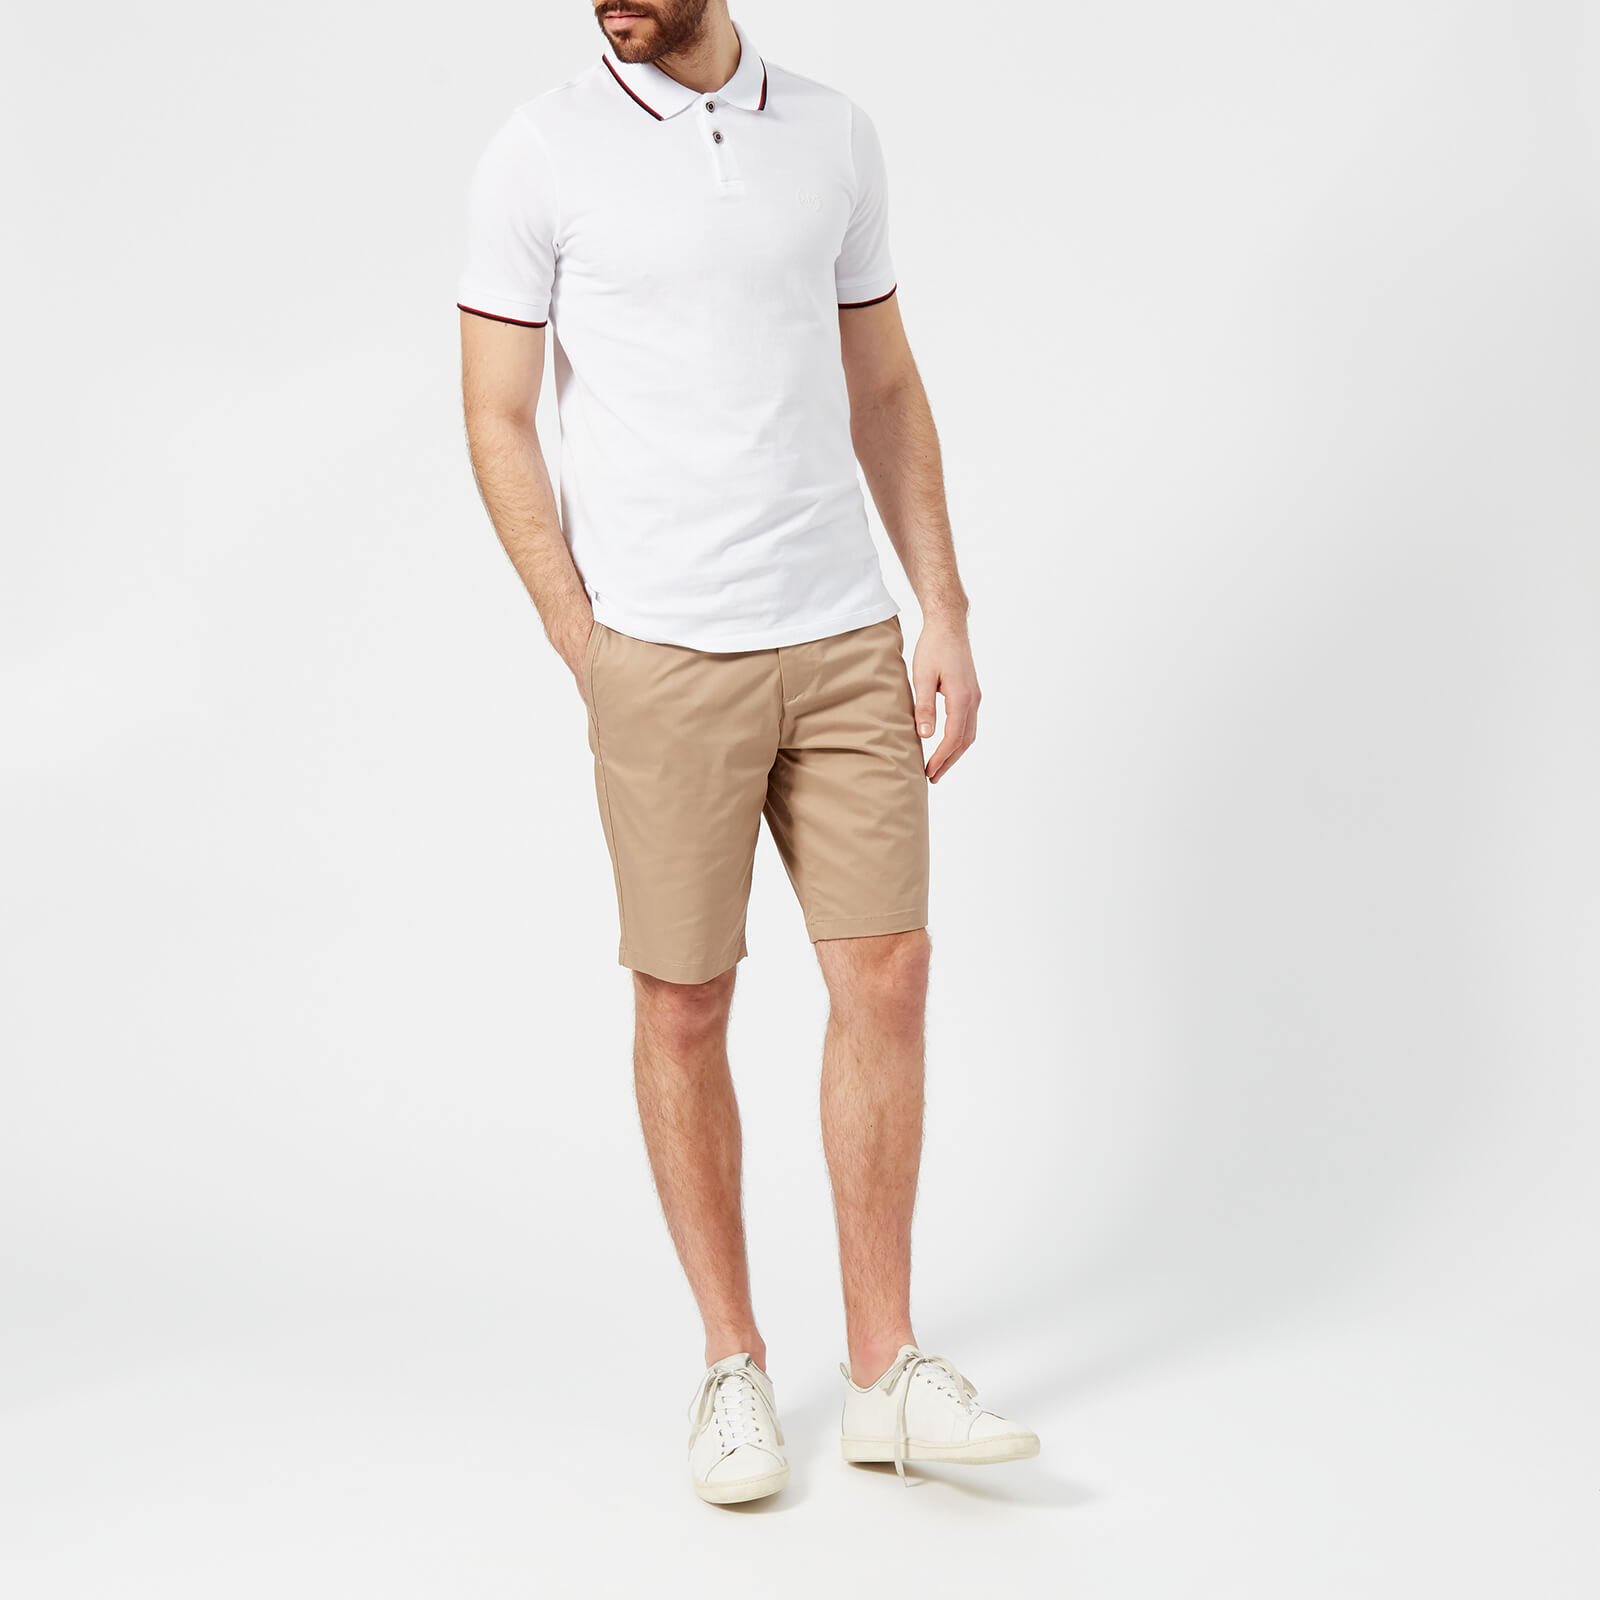 Armani Exchange Men's Tipped Polo Shirt - White - M